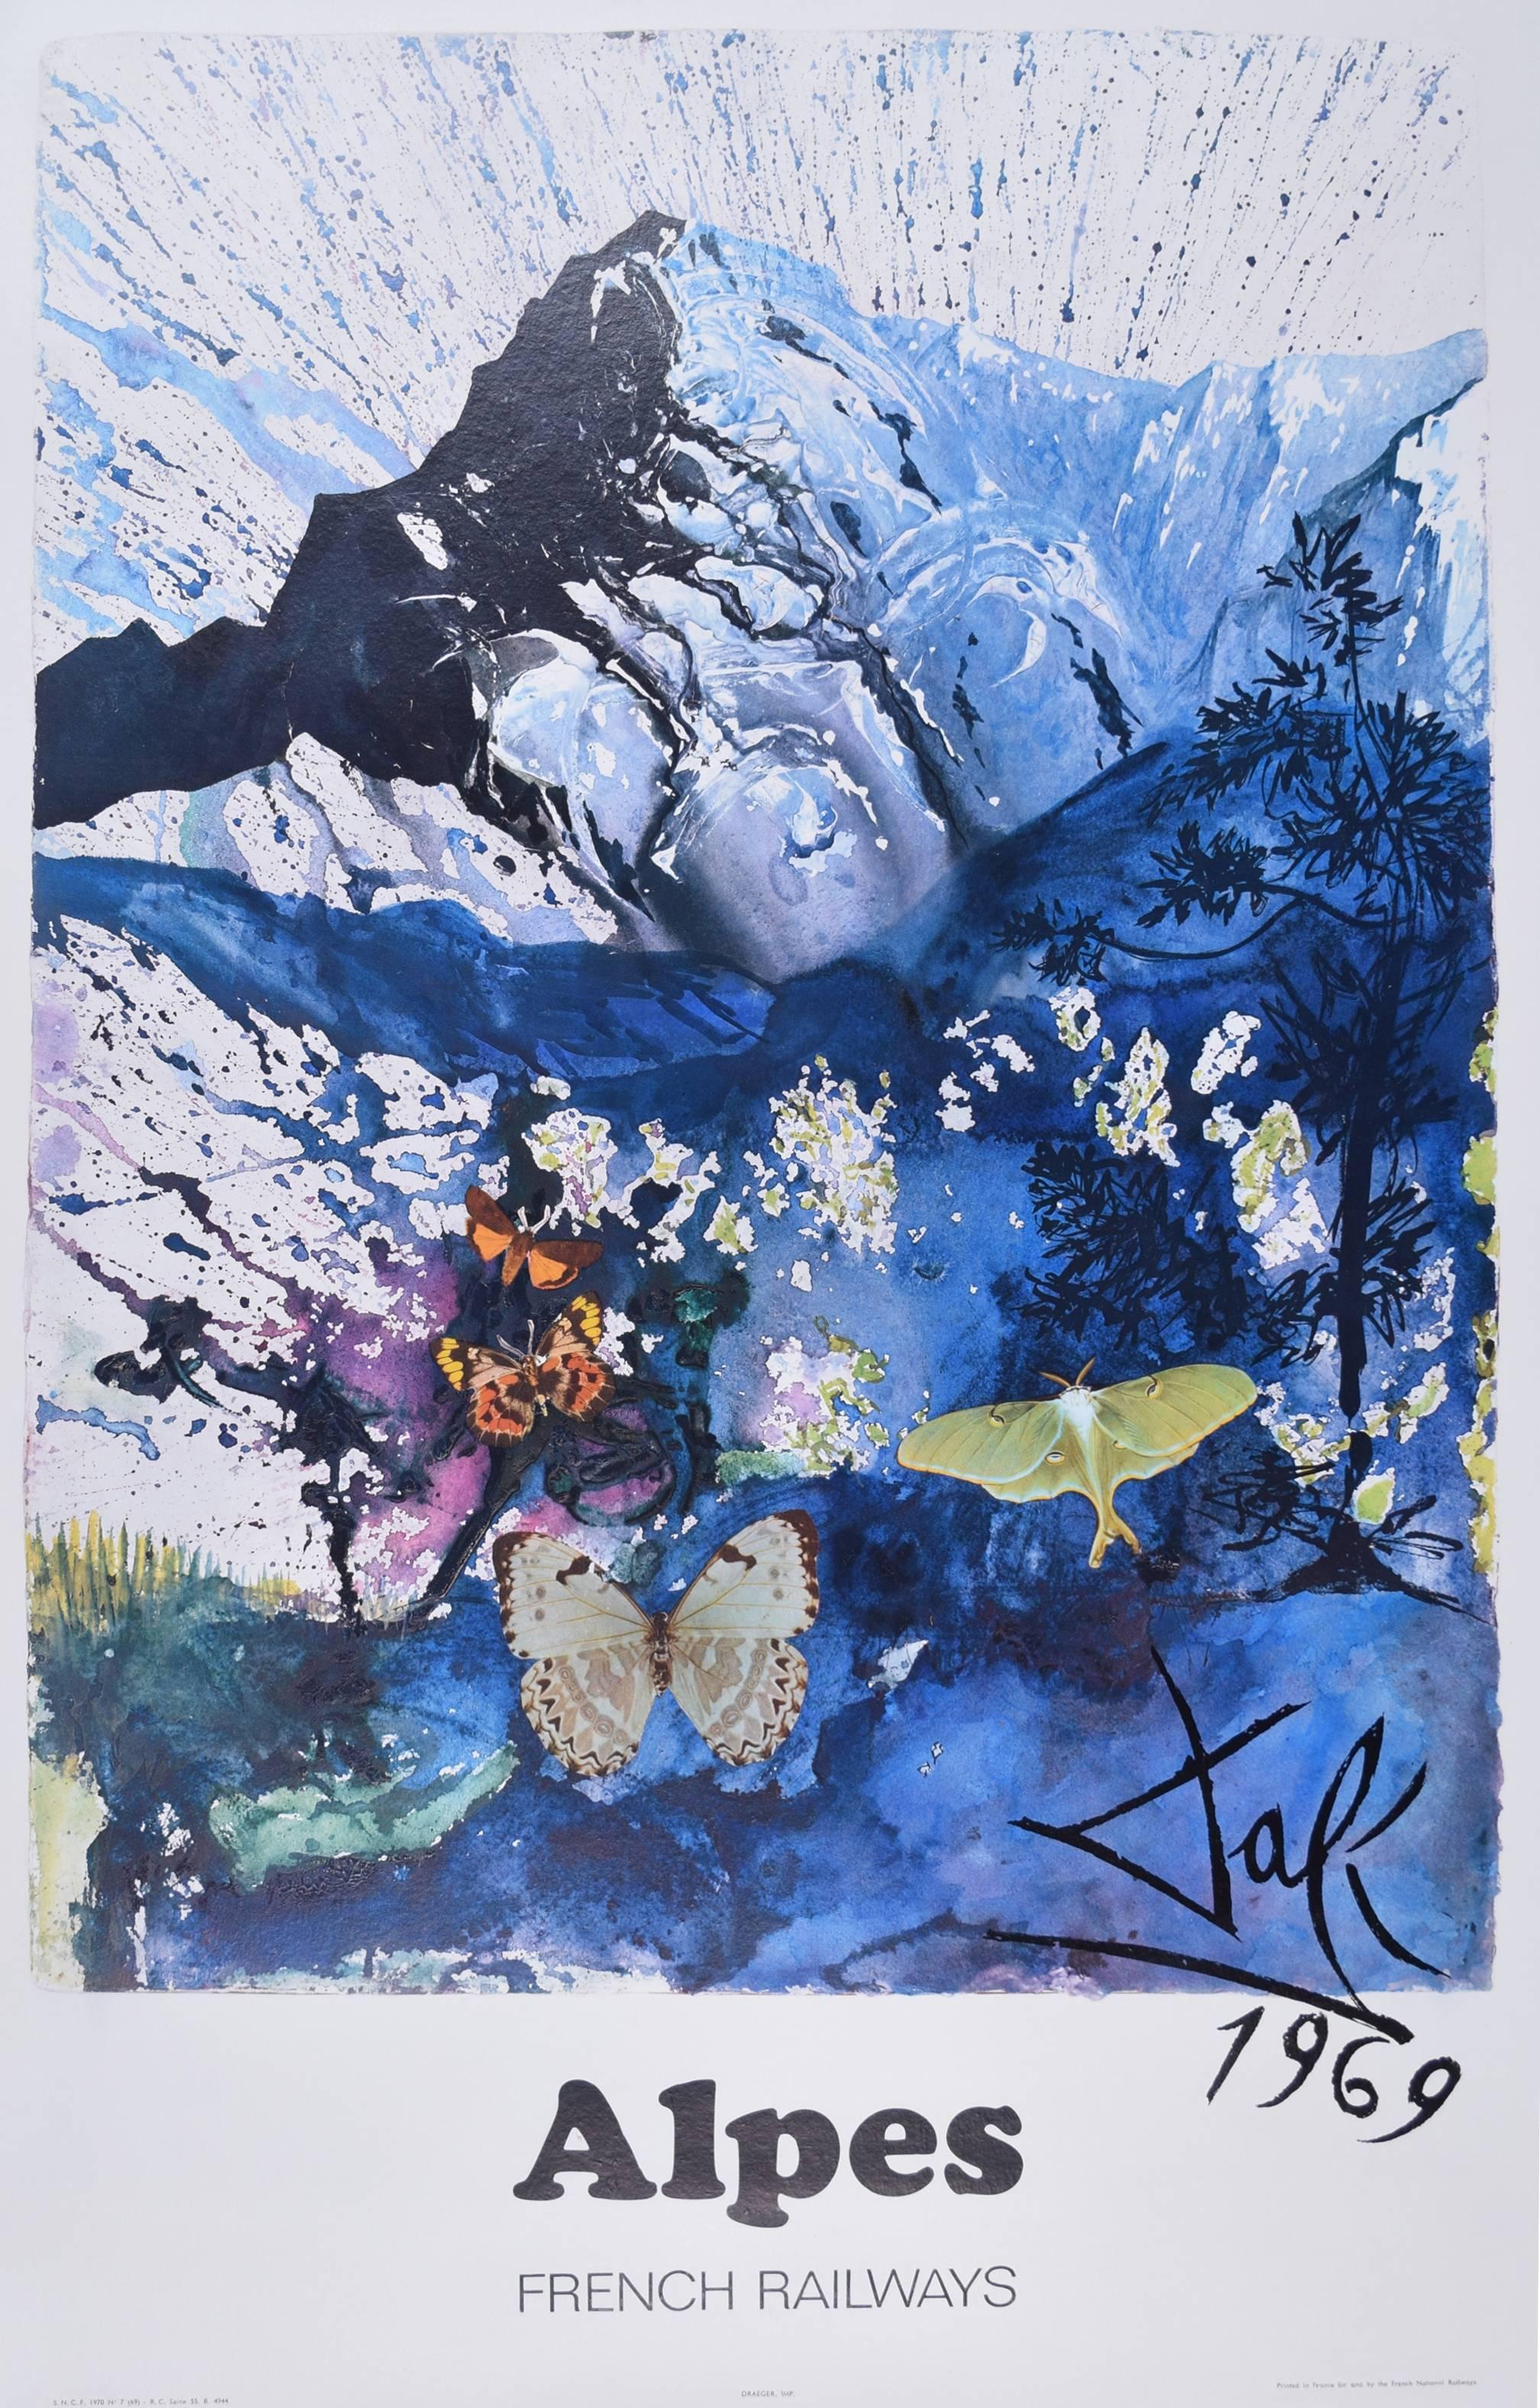 Landscape Print Salvador Dalí - Salvador Dali Les Alpes Skiing original affiche de voyage française SNCF 